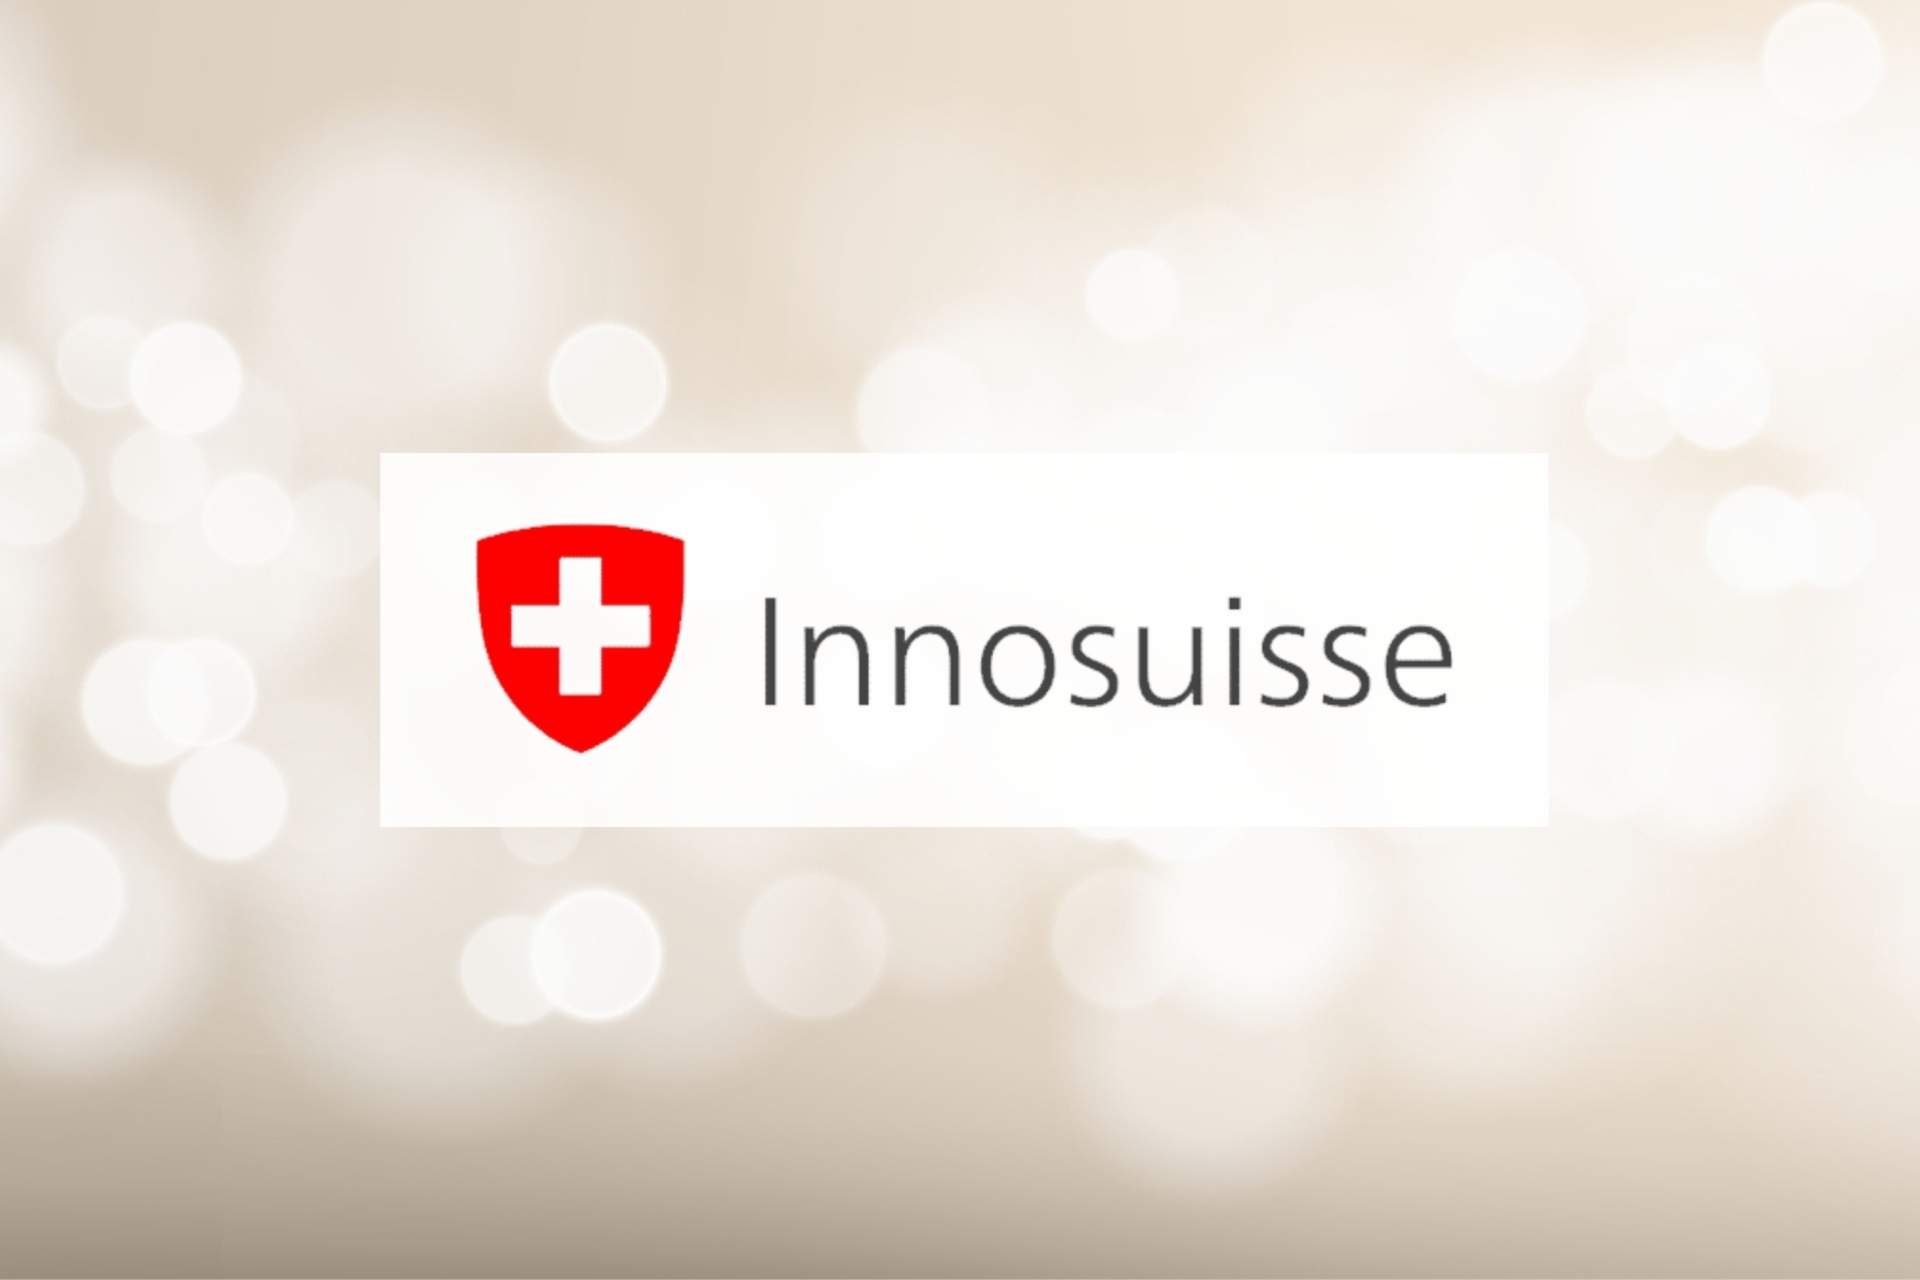 Innosuisse: Badan Promosi Inovasi Swiss